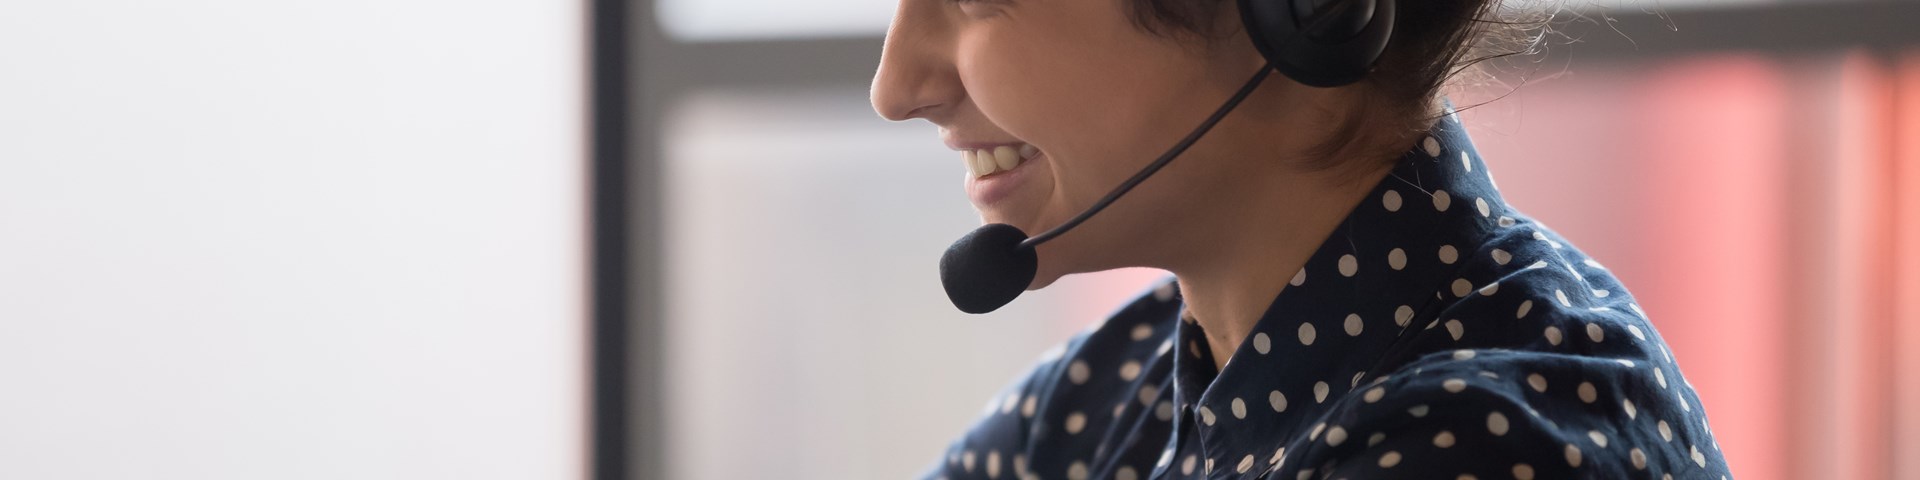 Woman smiling answering phone calls